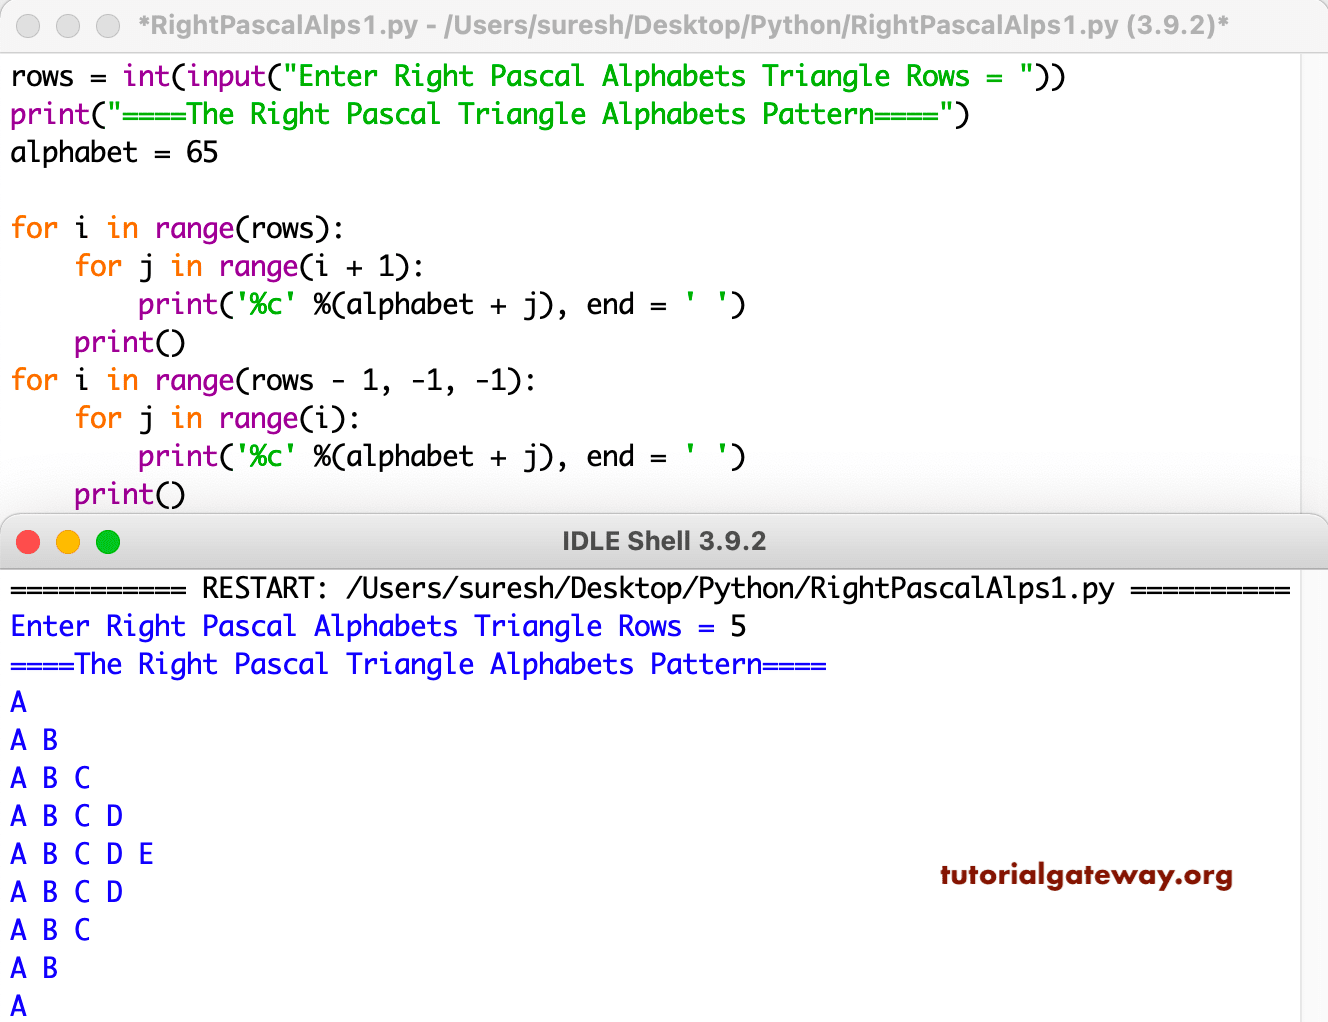 Python Program to Print Right Pascals Triangle Alphabets Pattern